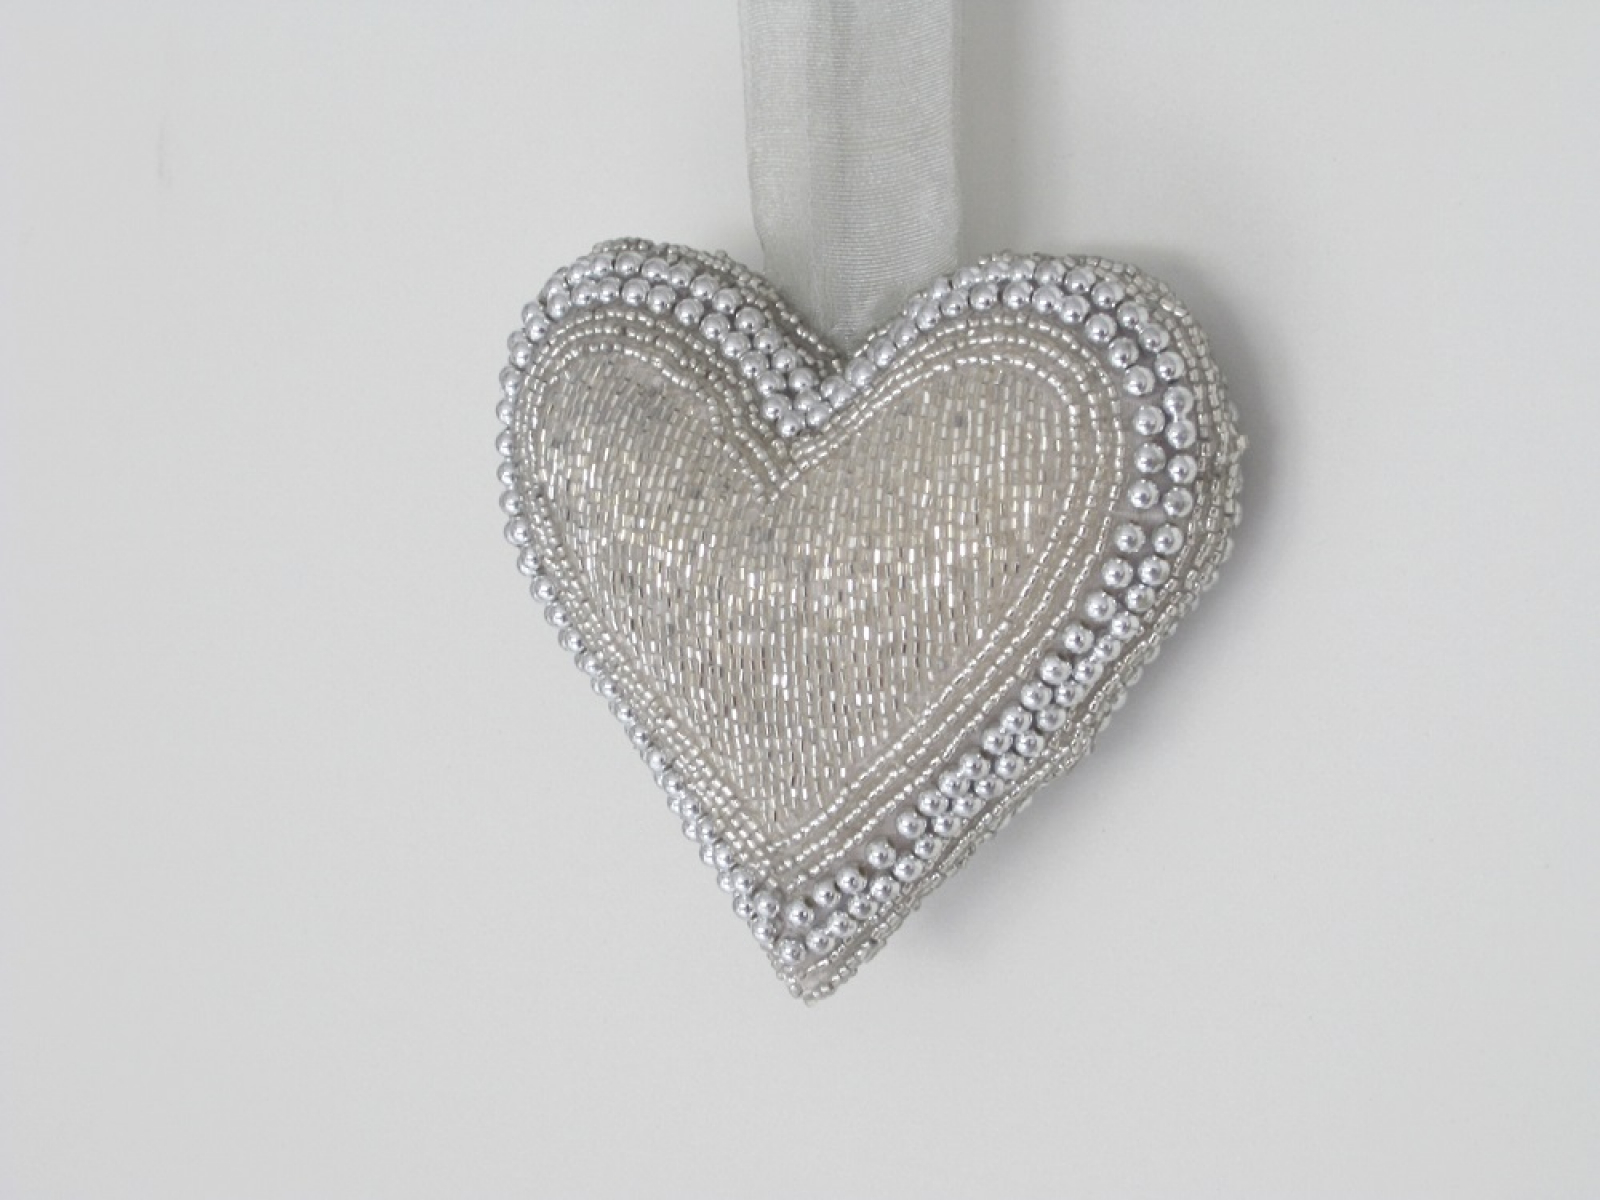 Kissen Herzform Perlen silb. 14x12,5cm ca.4,5cm di